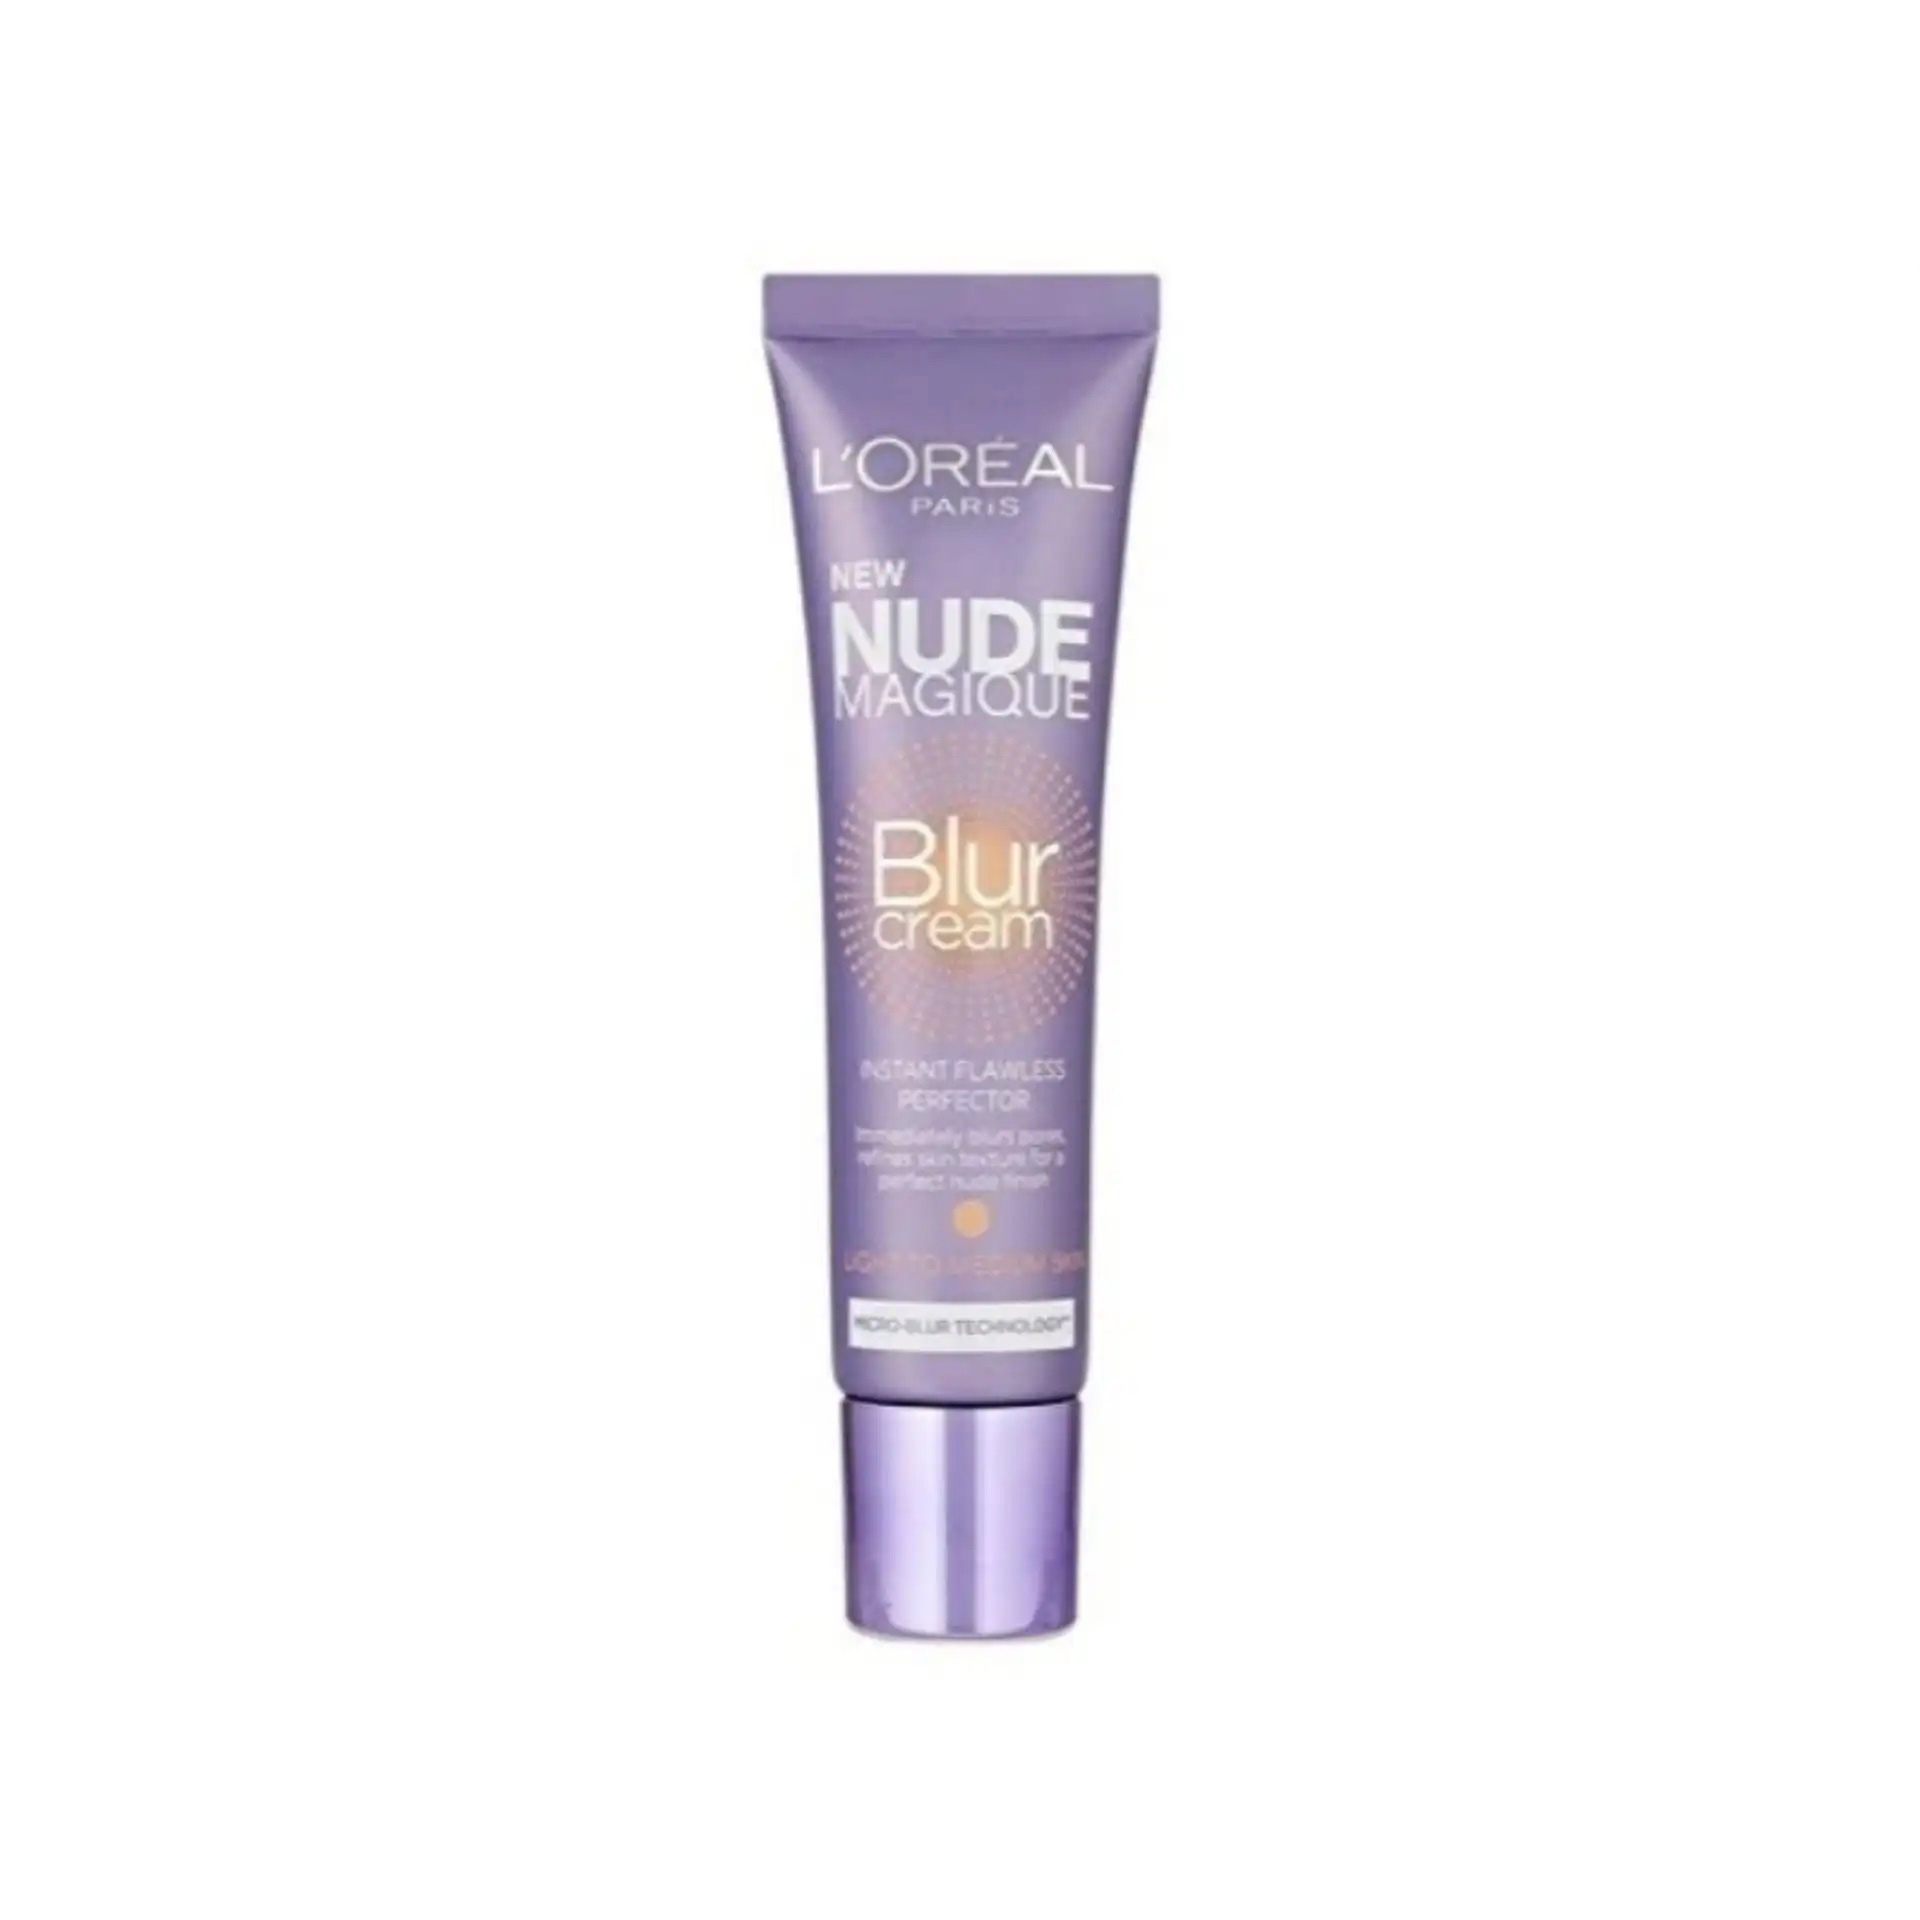 LOreal Nude Magique Blur Cream - Bellyrubz Beauty